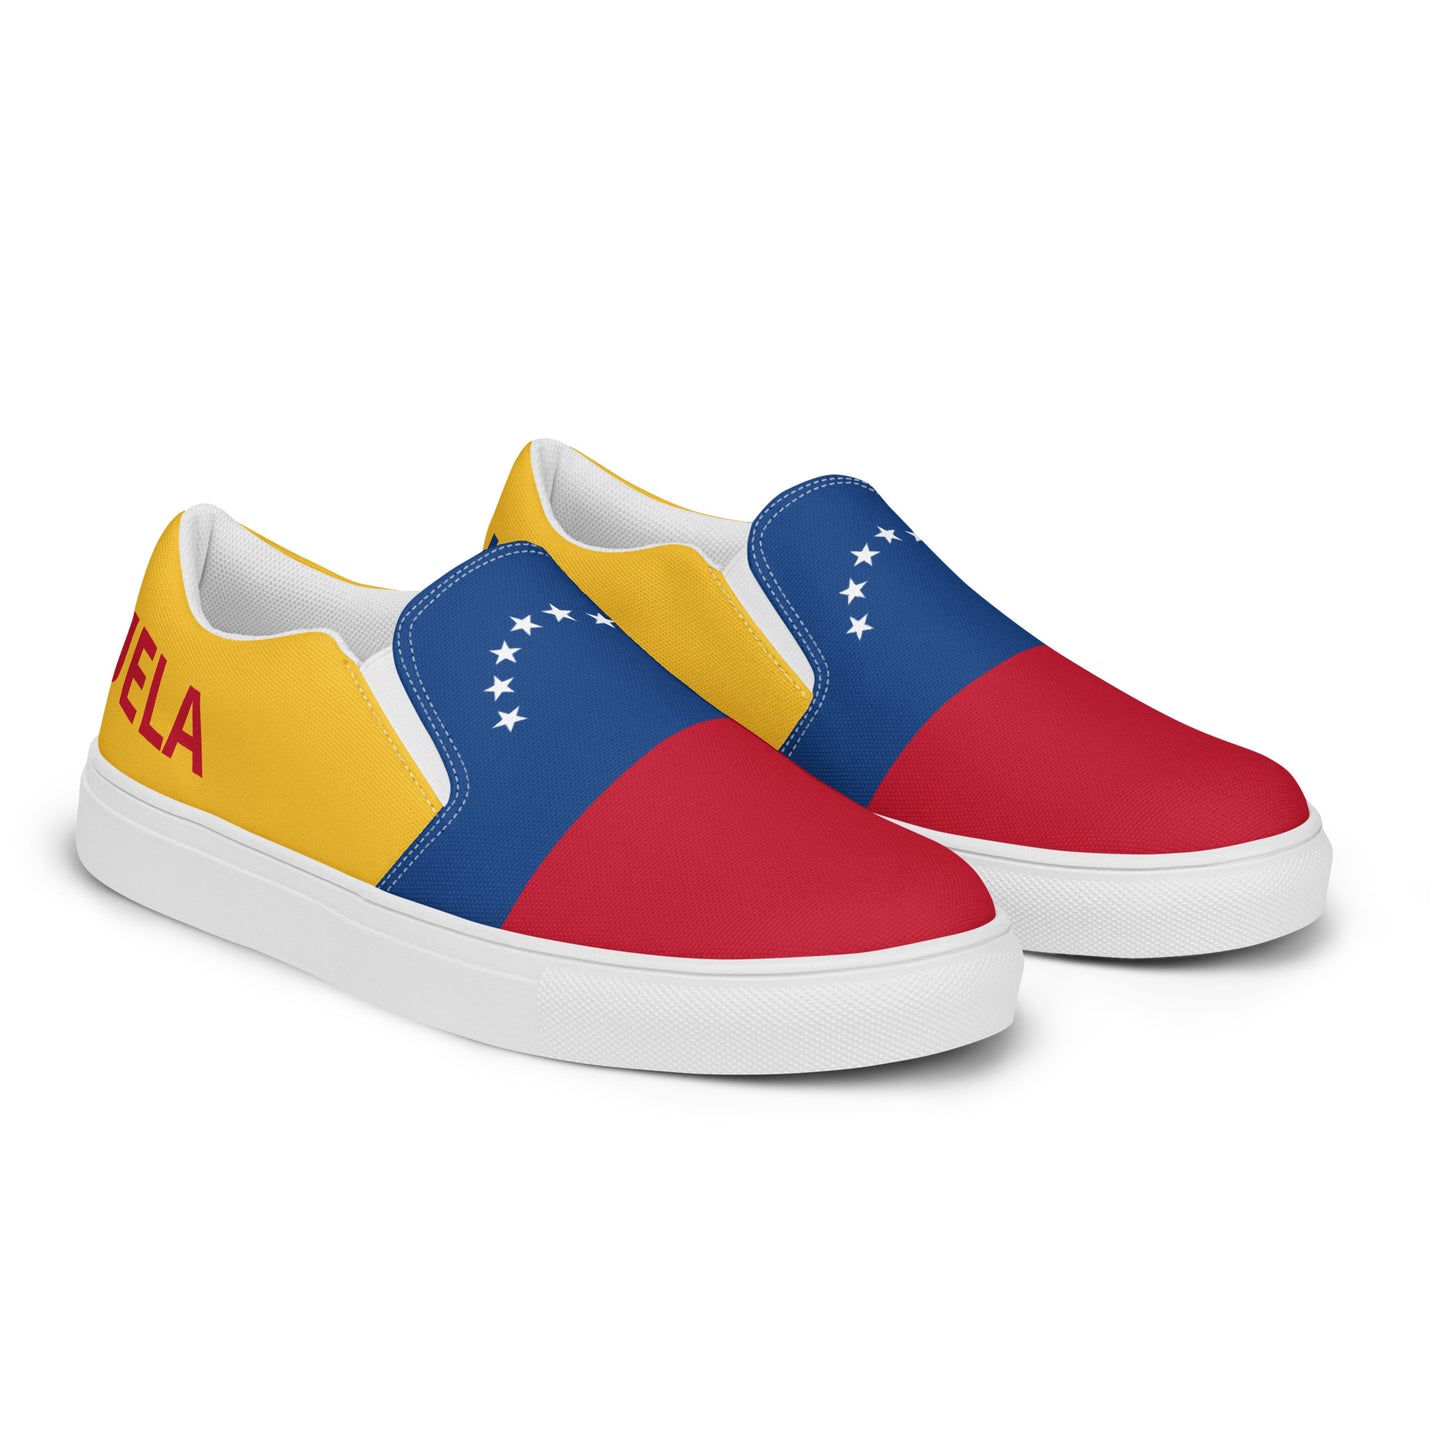 Venezuela - Men - Bandera - Slip-on shoes